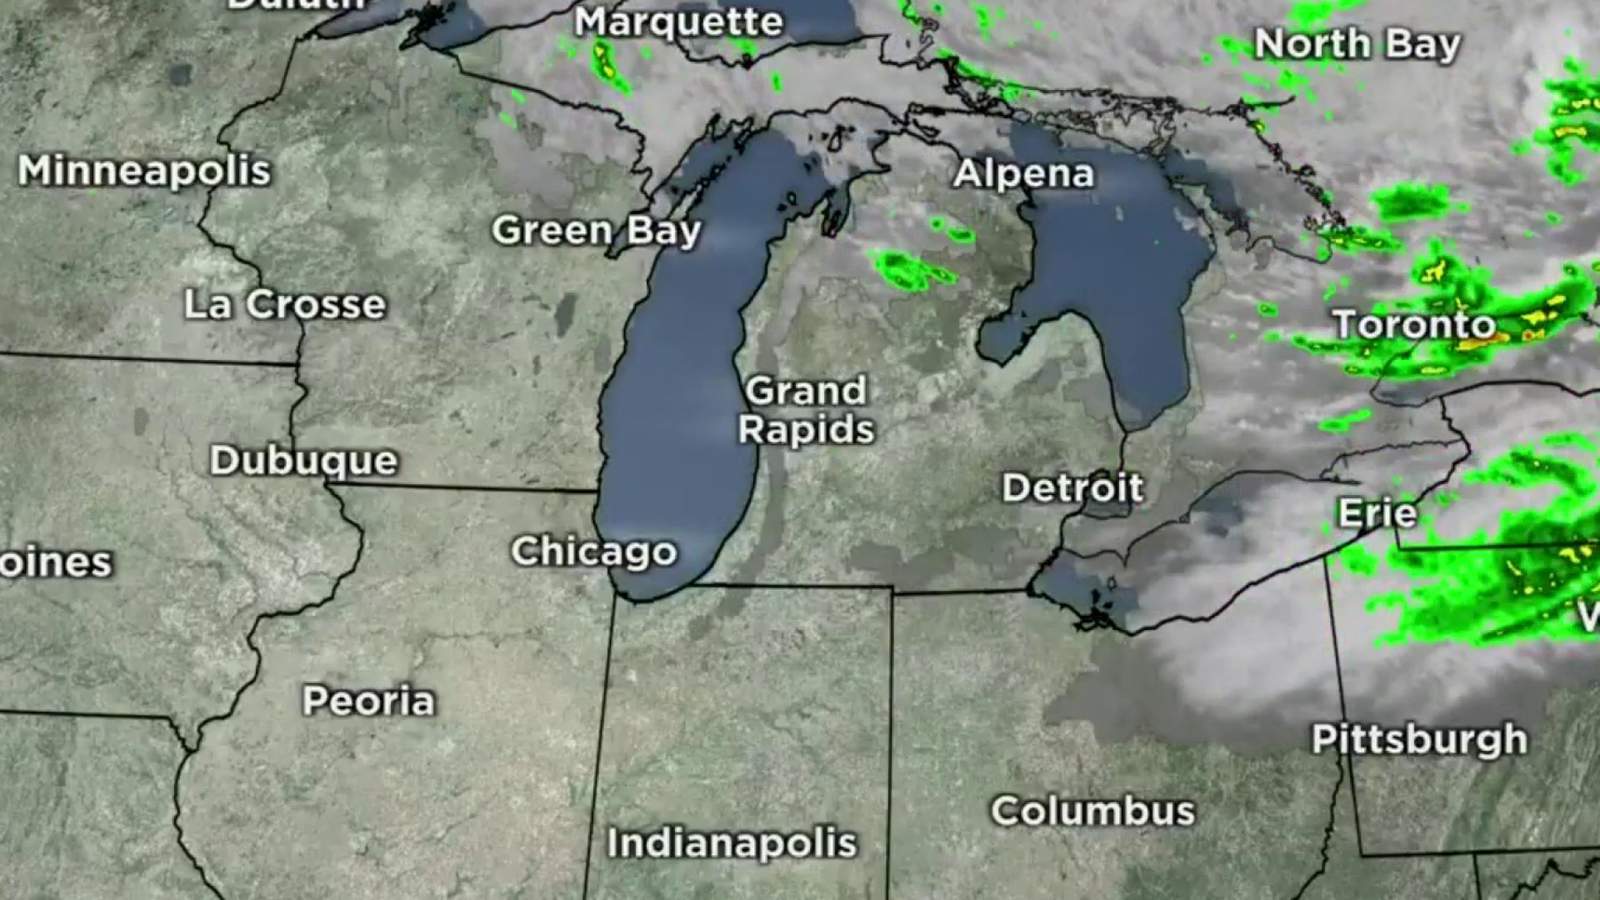 Metro Detroit weather: Calmer, cooler before unseasonable warmth returns